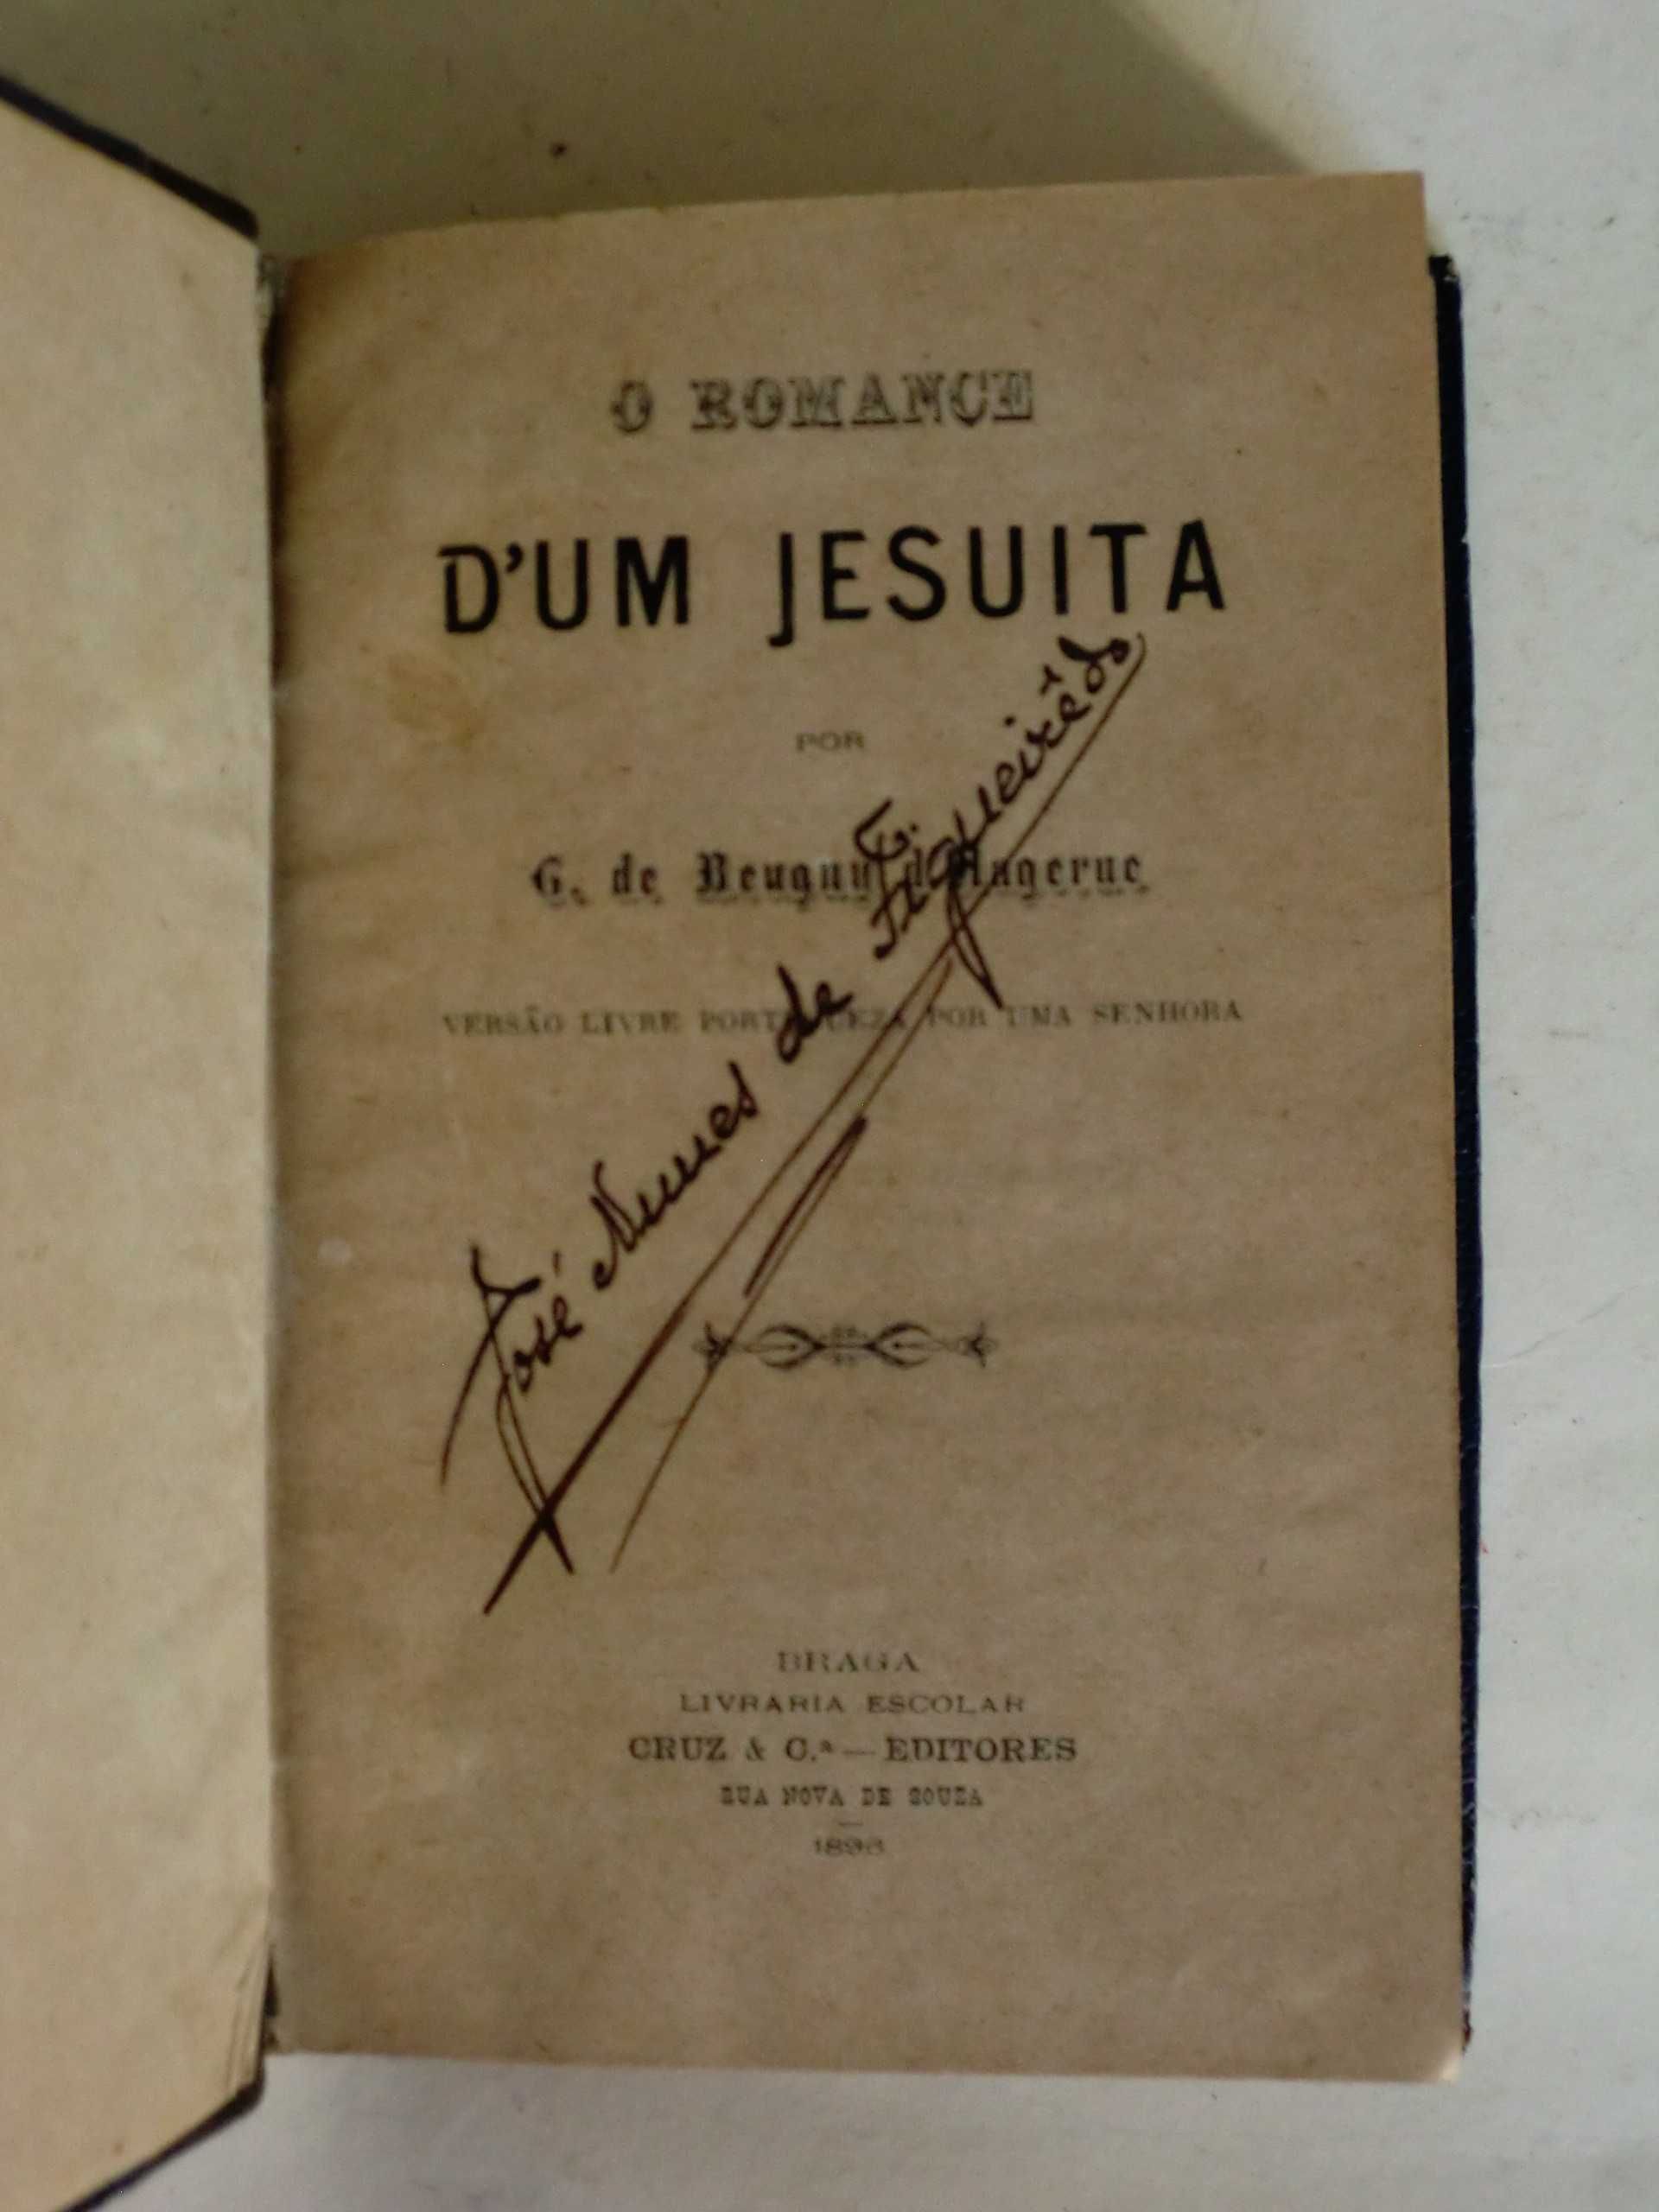 1896 - O Romance D´um Jesuita
de Benguy d´Hagerue